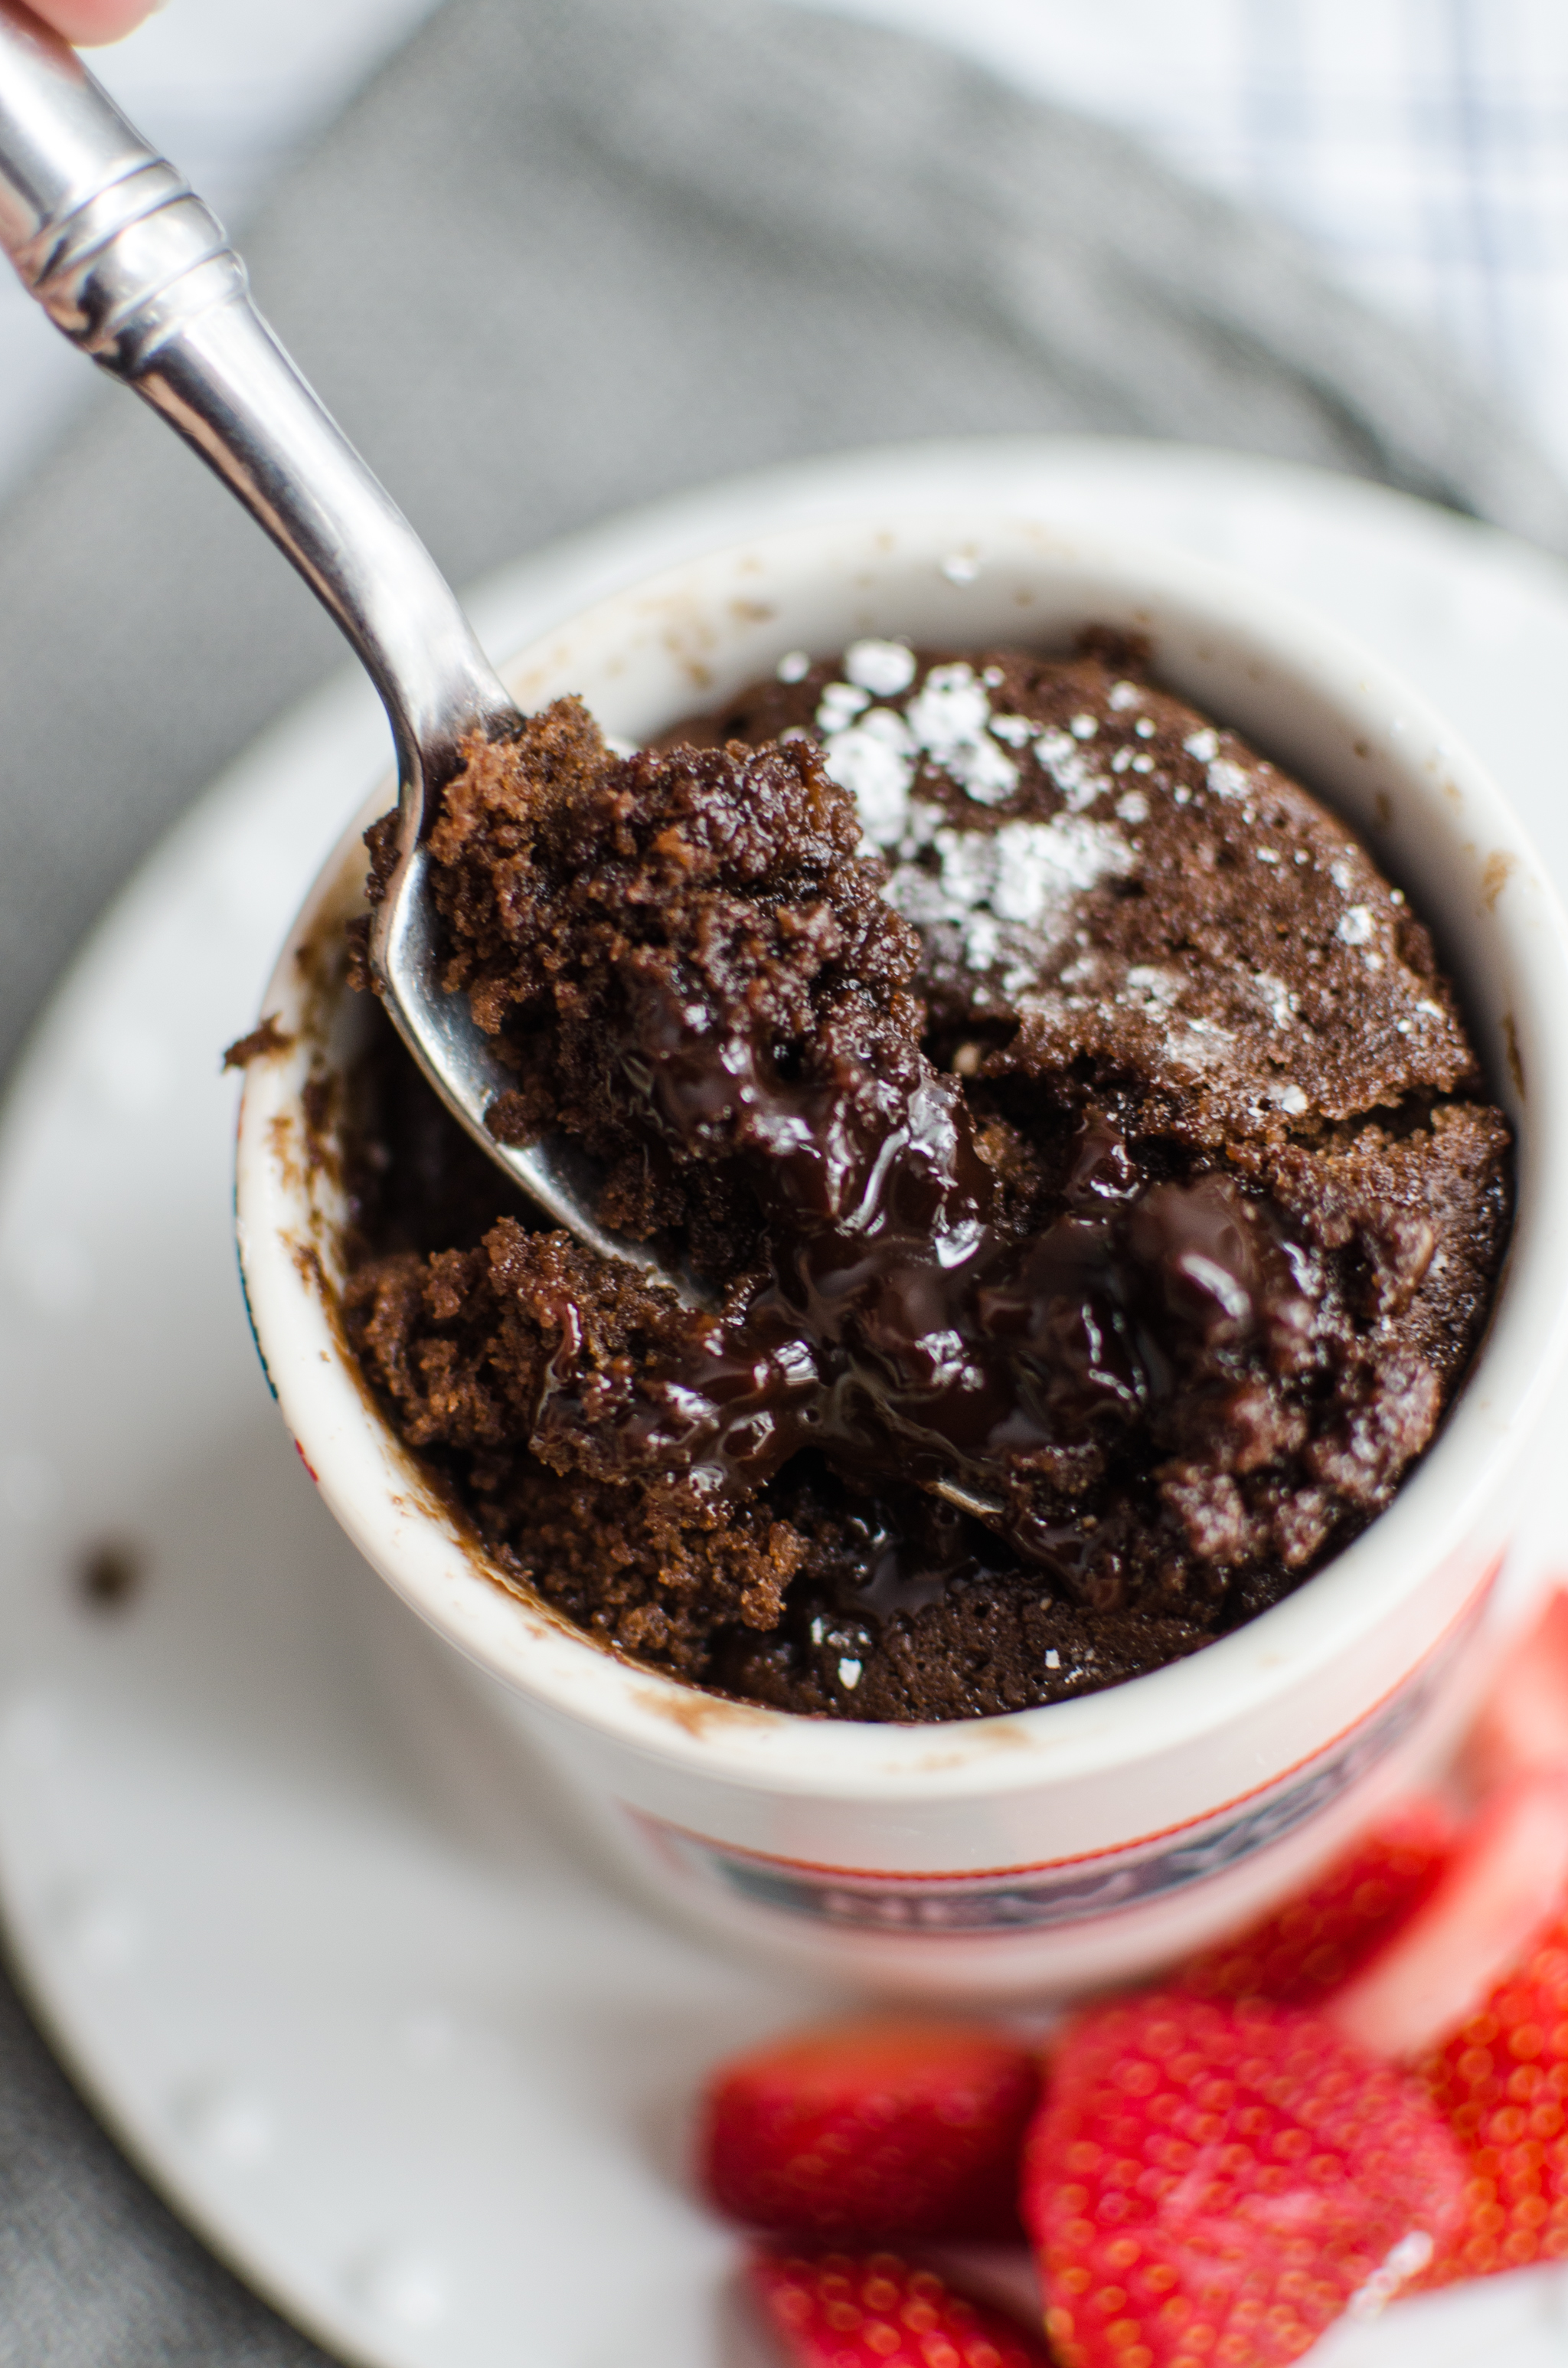 spoon with chocolate lava mug cake